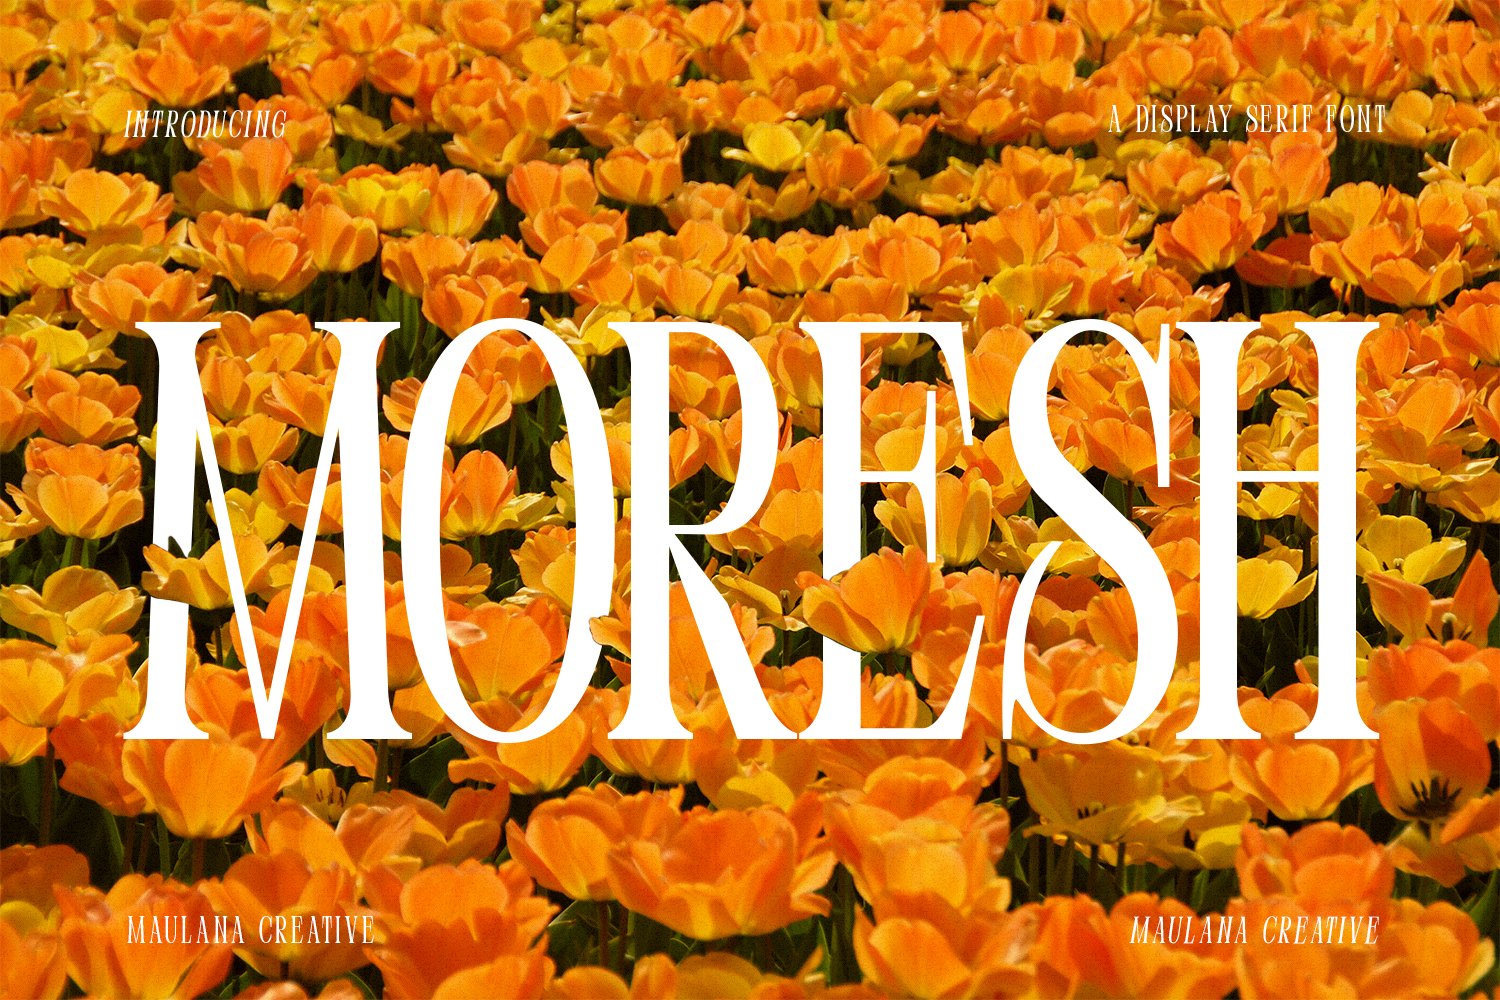 Moresh Serif Display Font cover image.